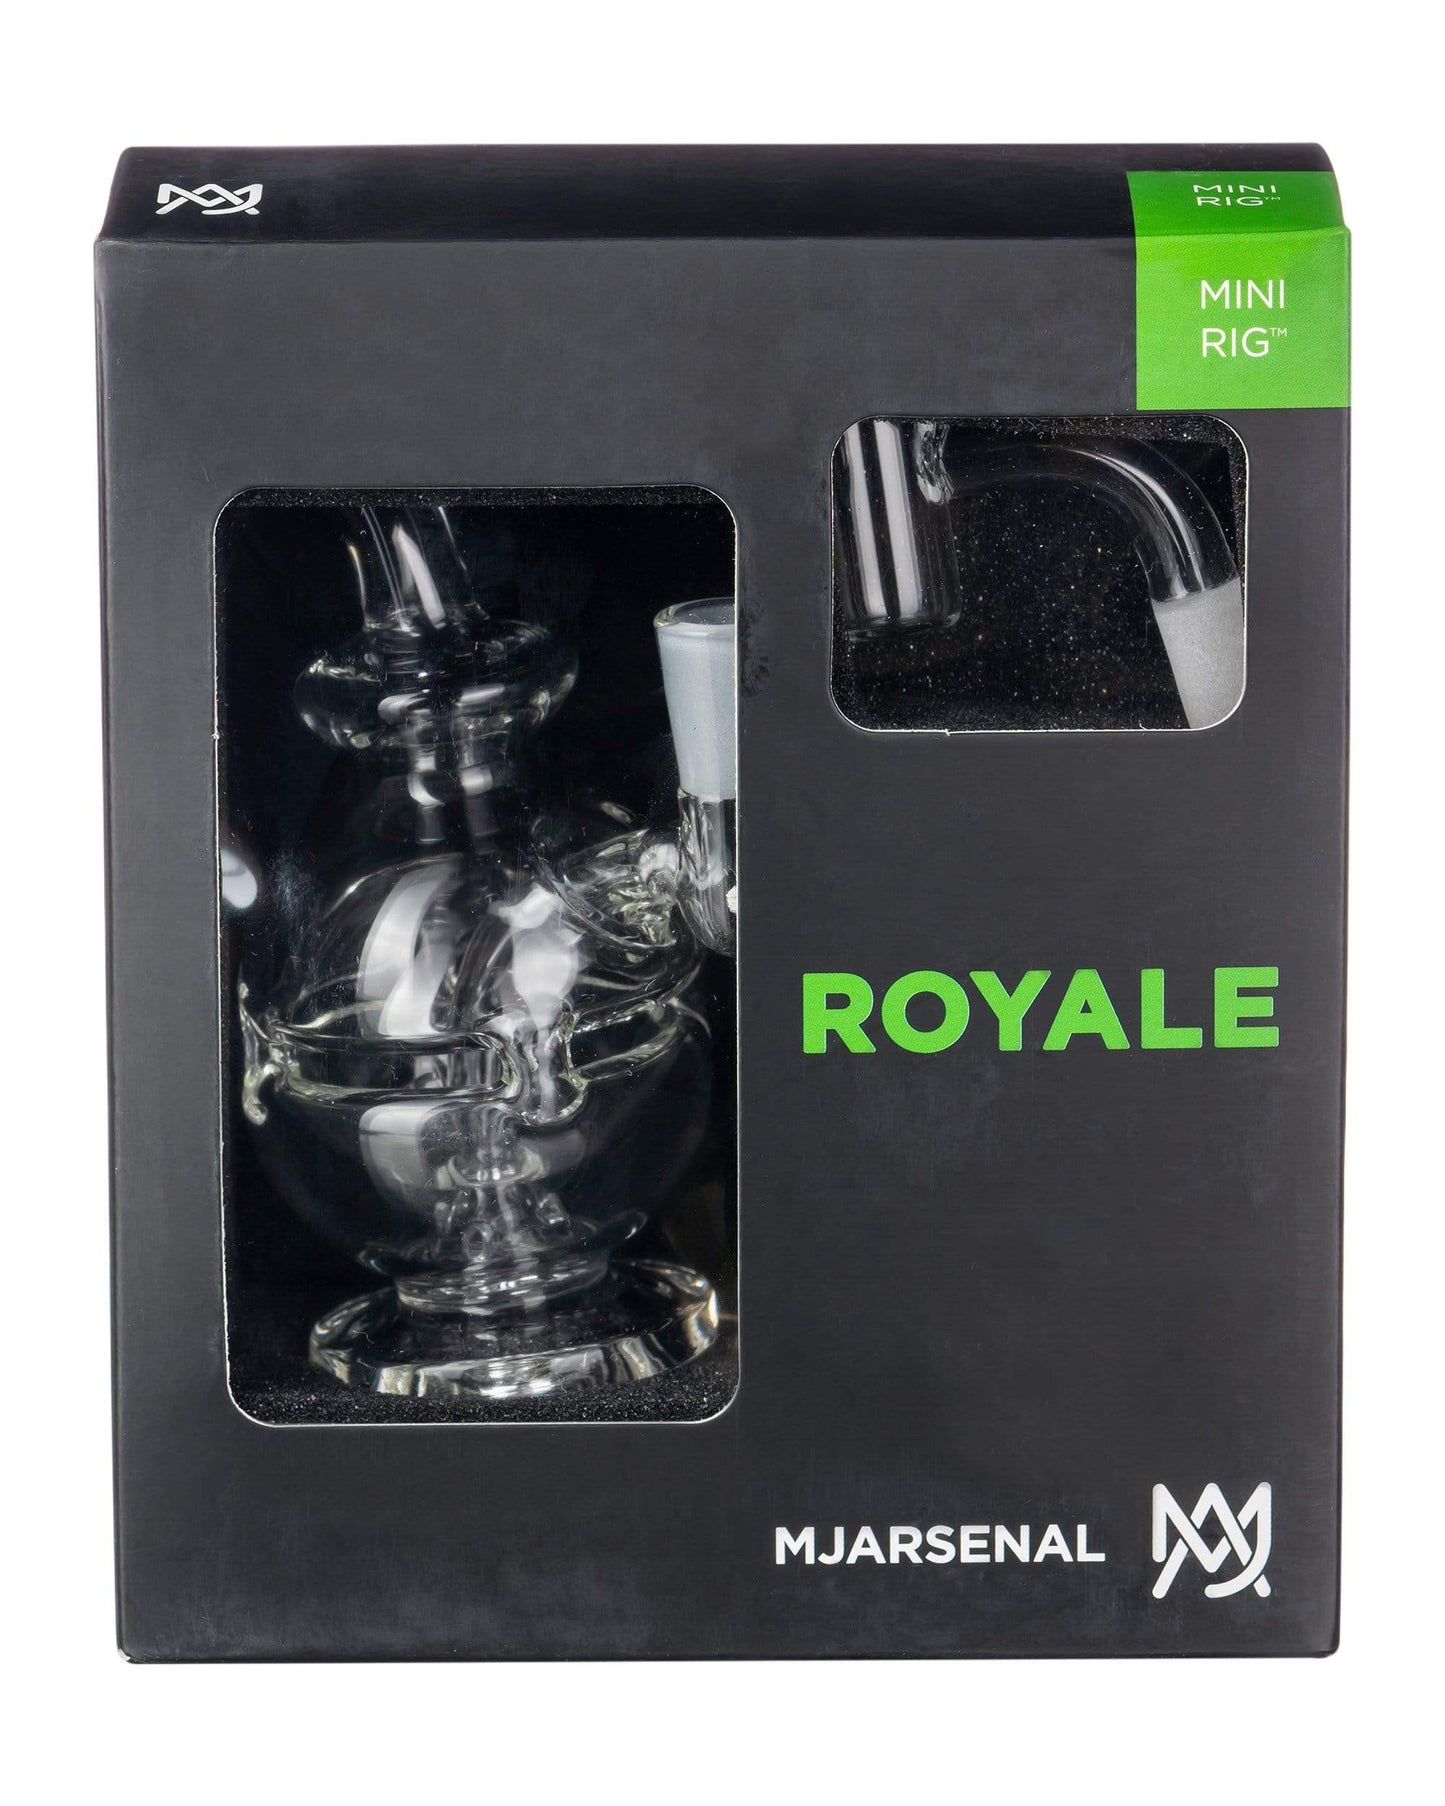 MJ arsenal Royale Mini Rig Best Sales Price - Bongs